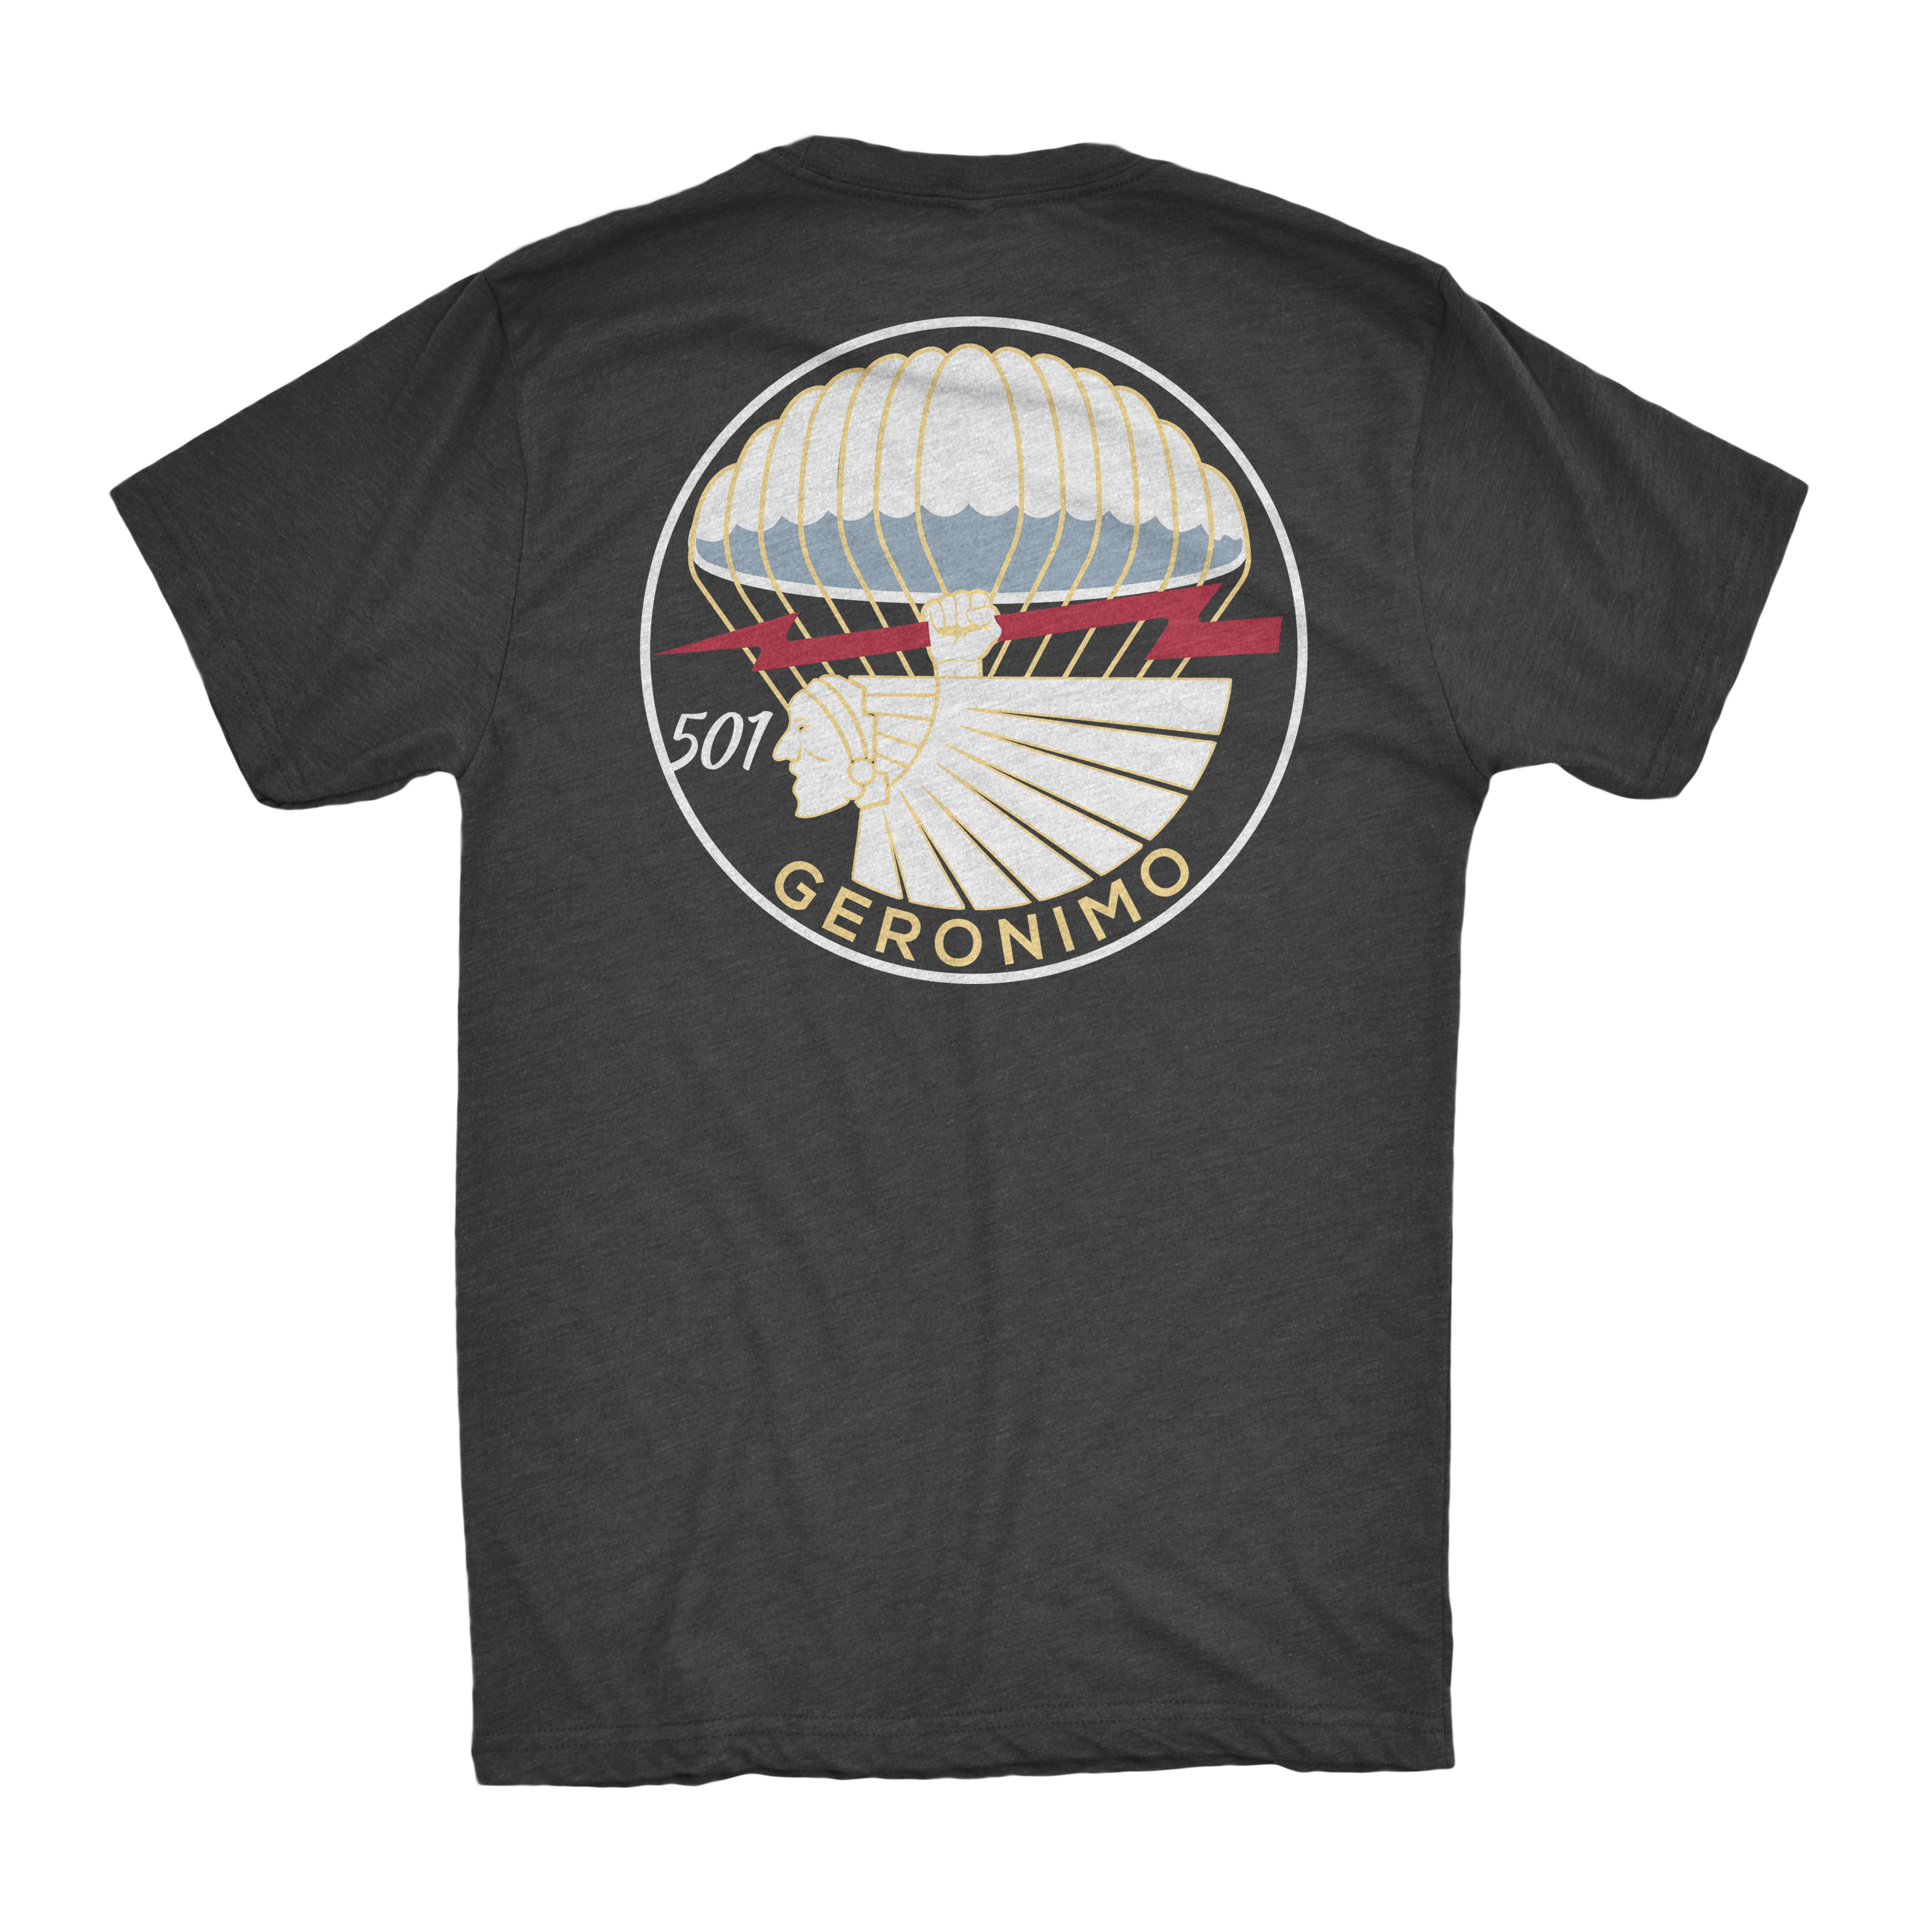 501st Geronimo Airborne Classic Shirt